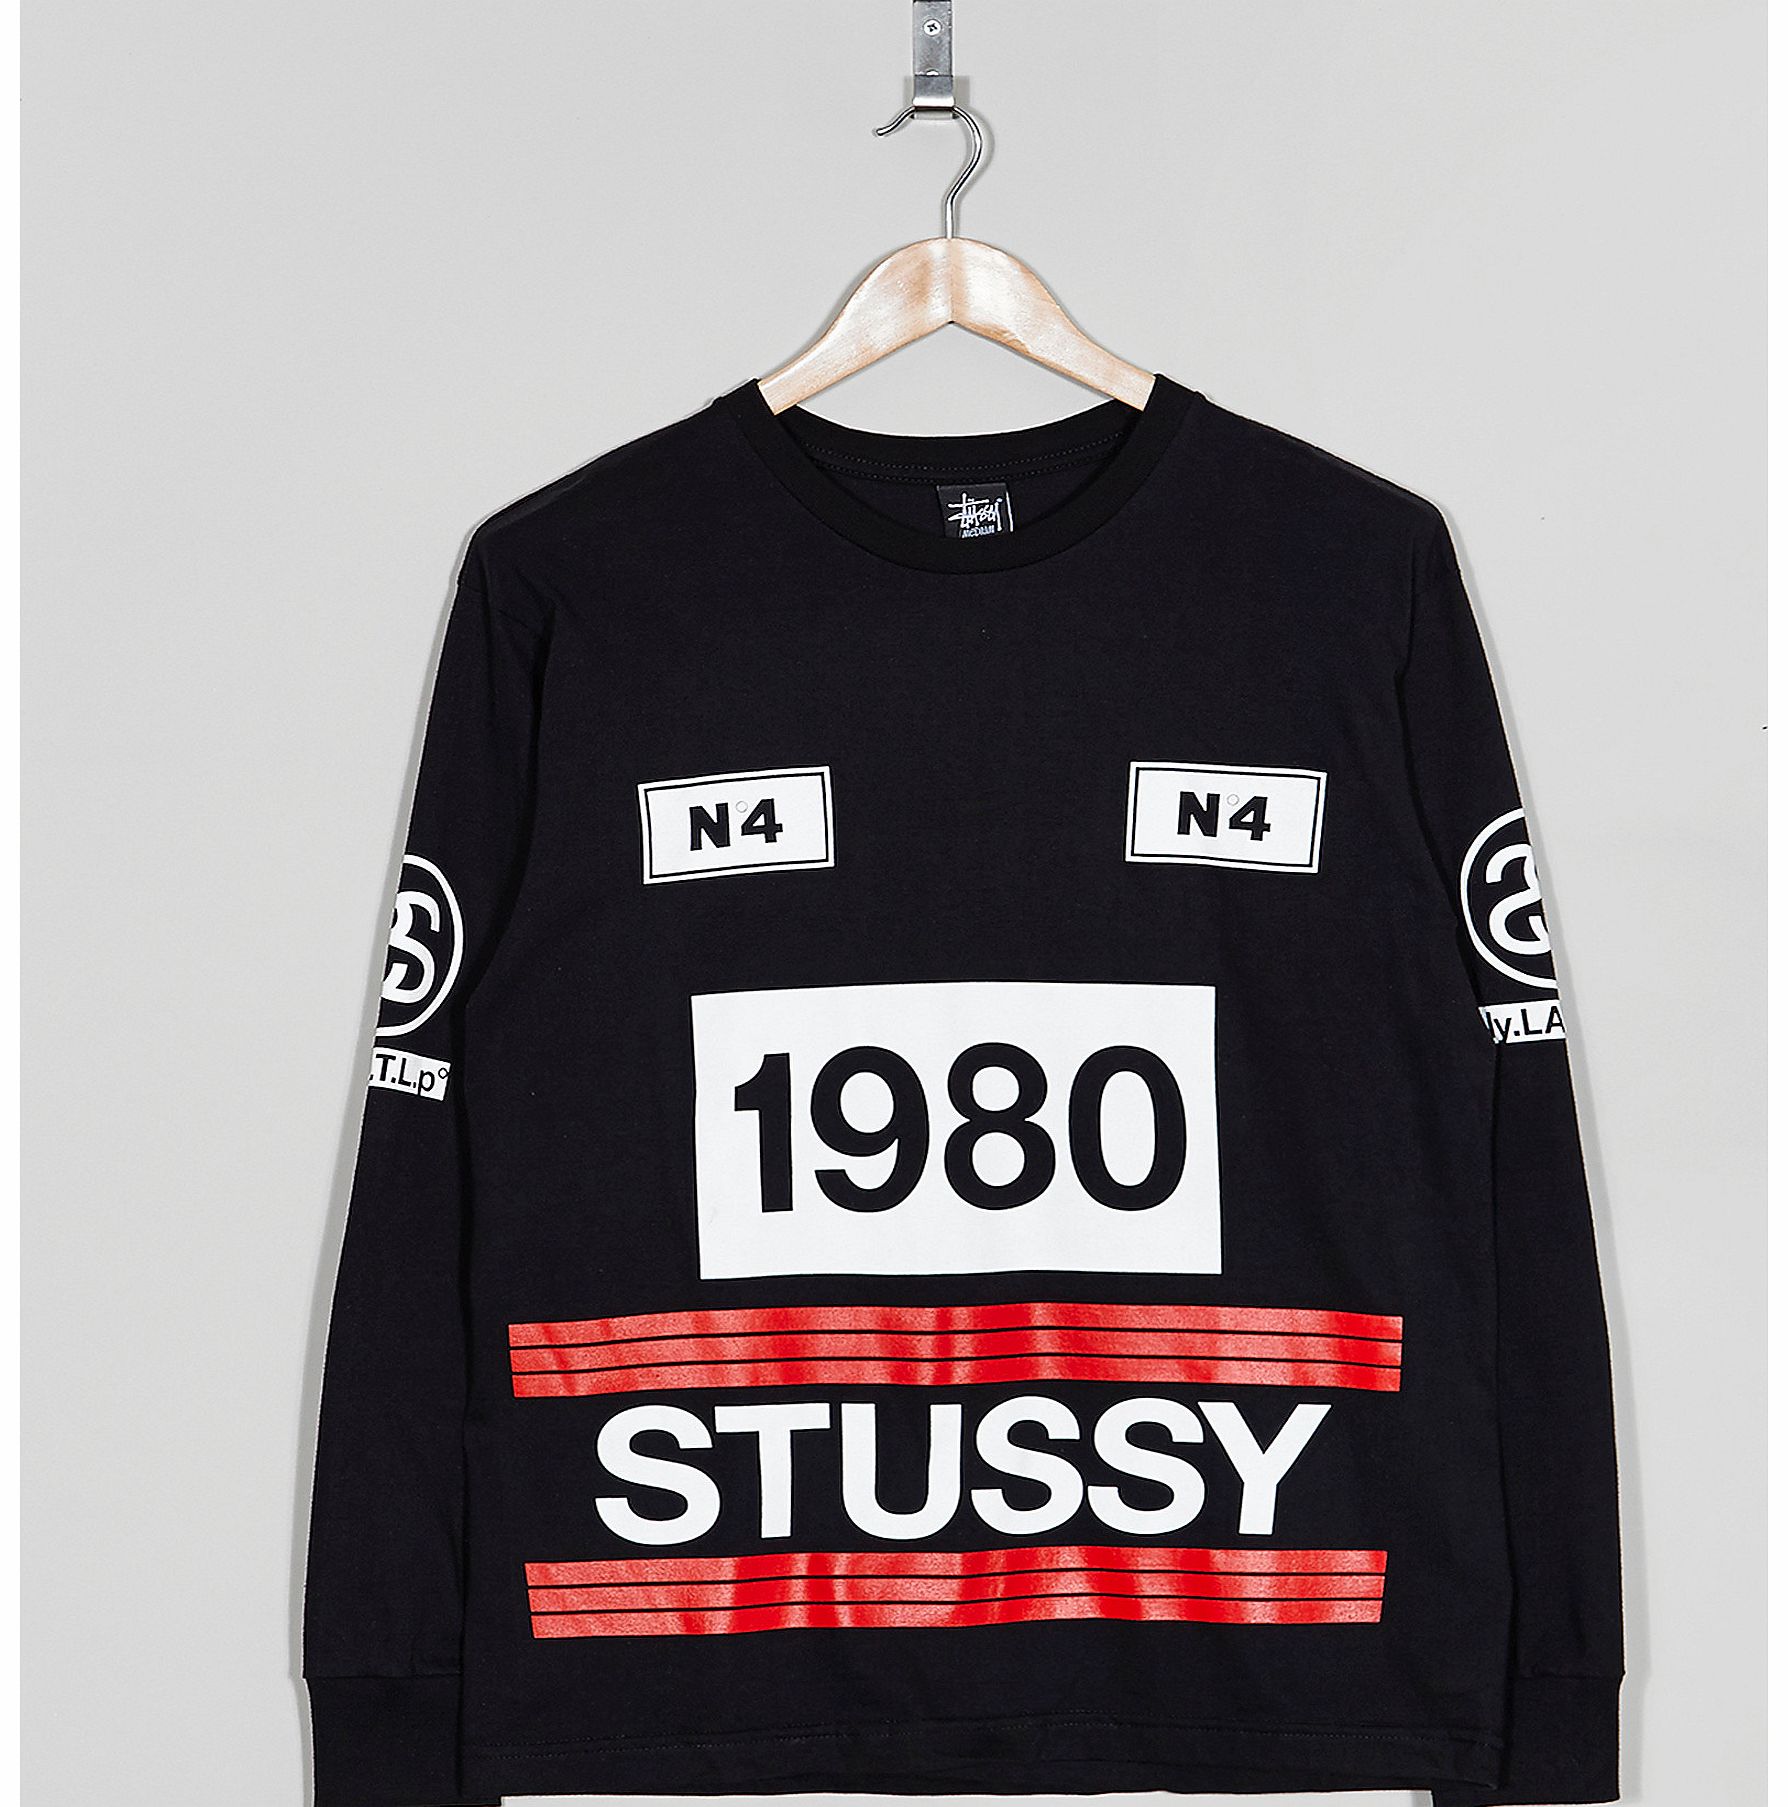 Stussy 1980 Long Sleeve T-Shirt